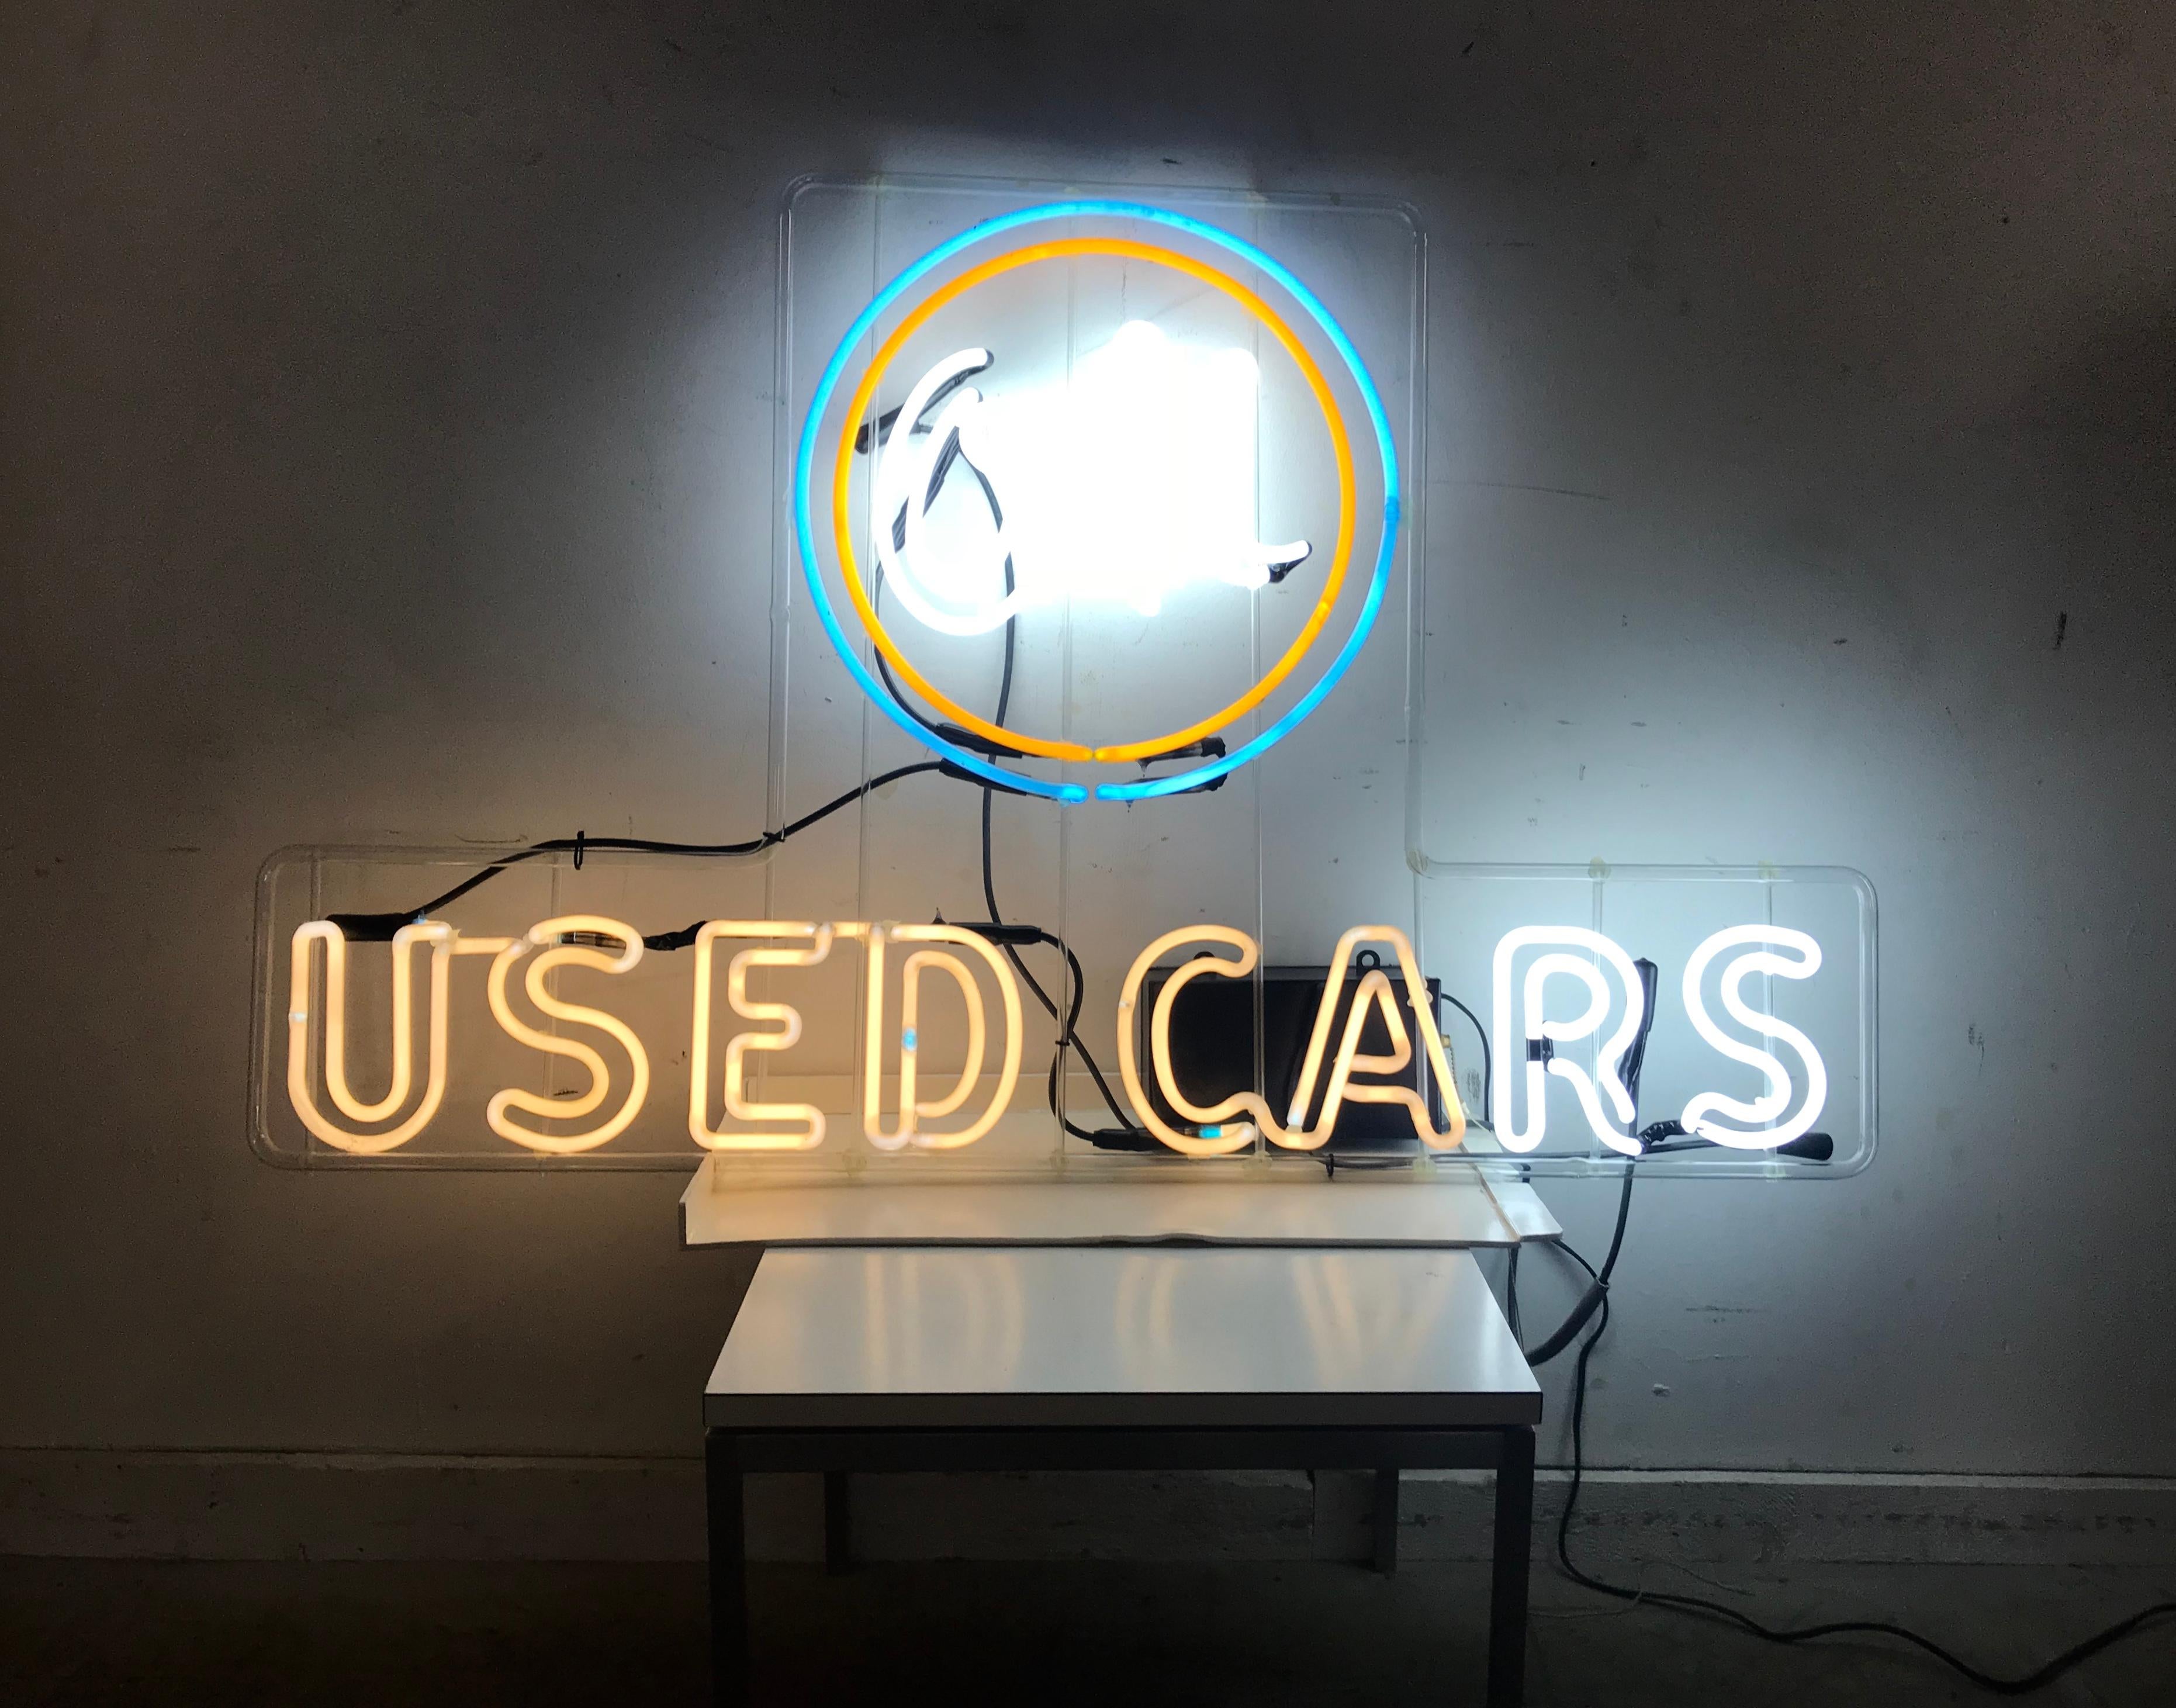 American Original Vintage Ok Used Cars Neon Sign, Large Measuring